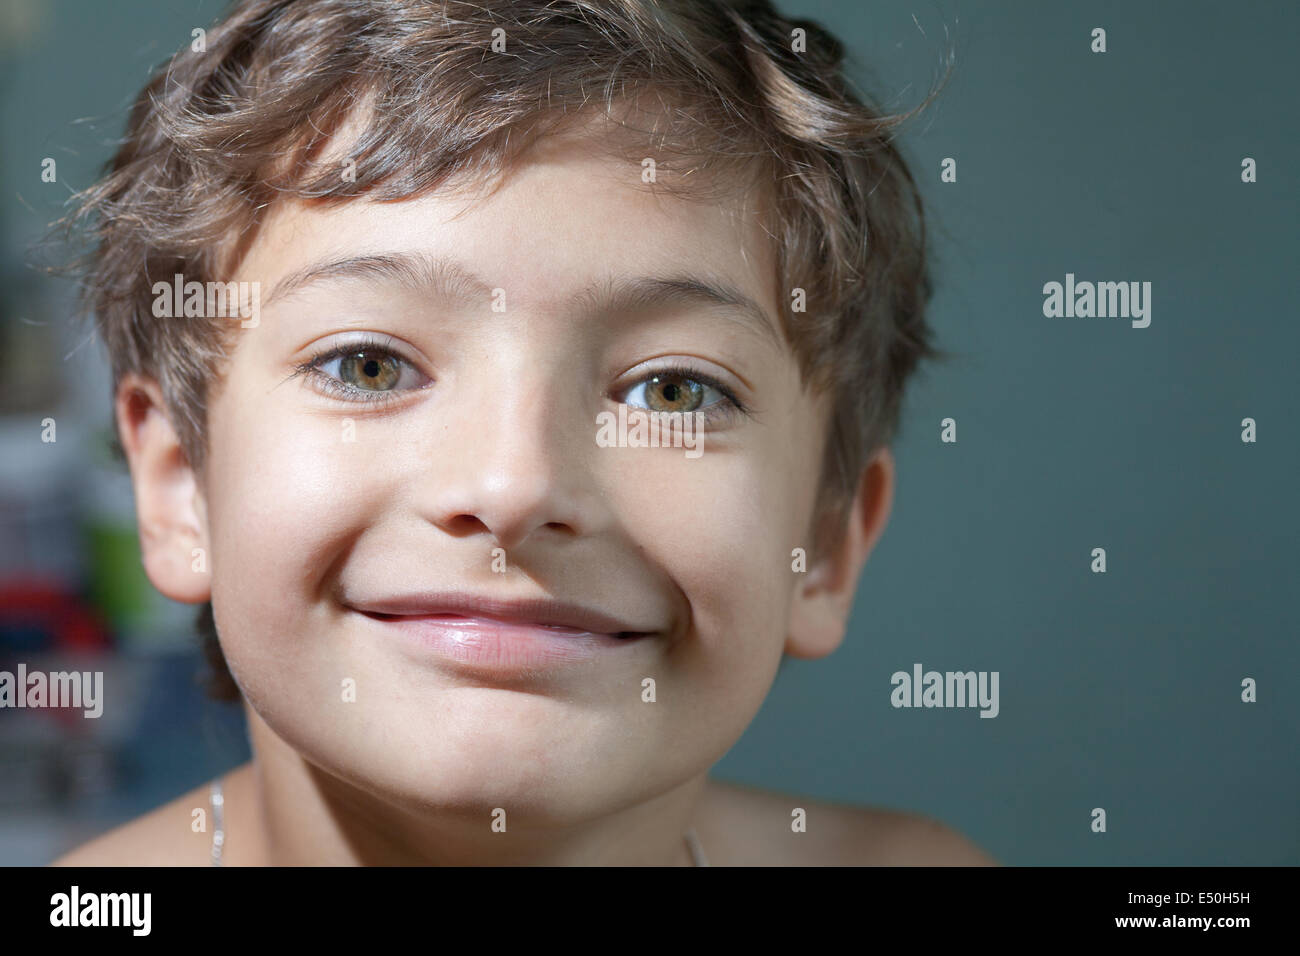 smile - boy make faces Stock Photo